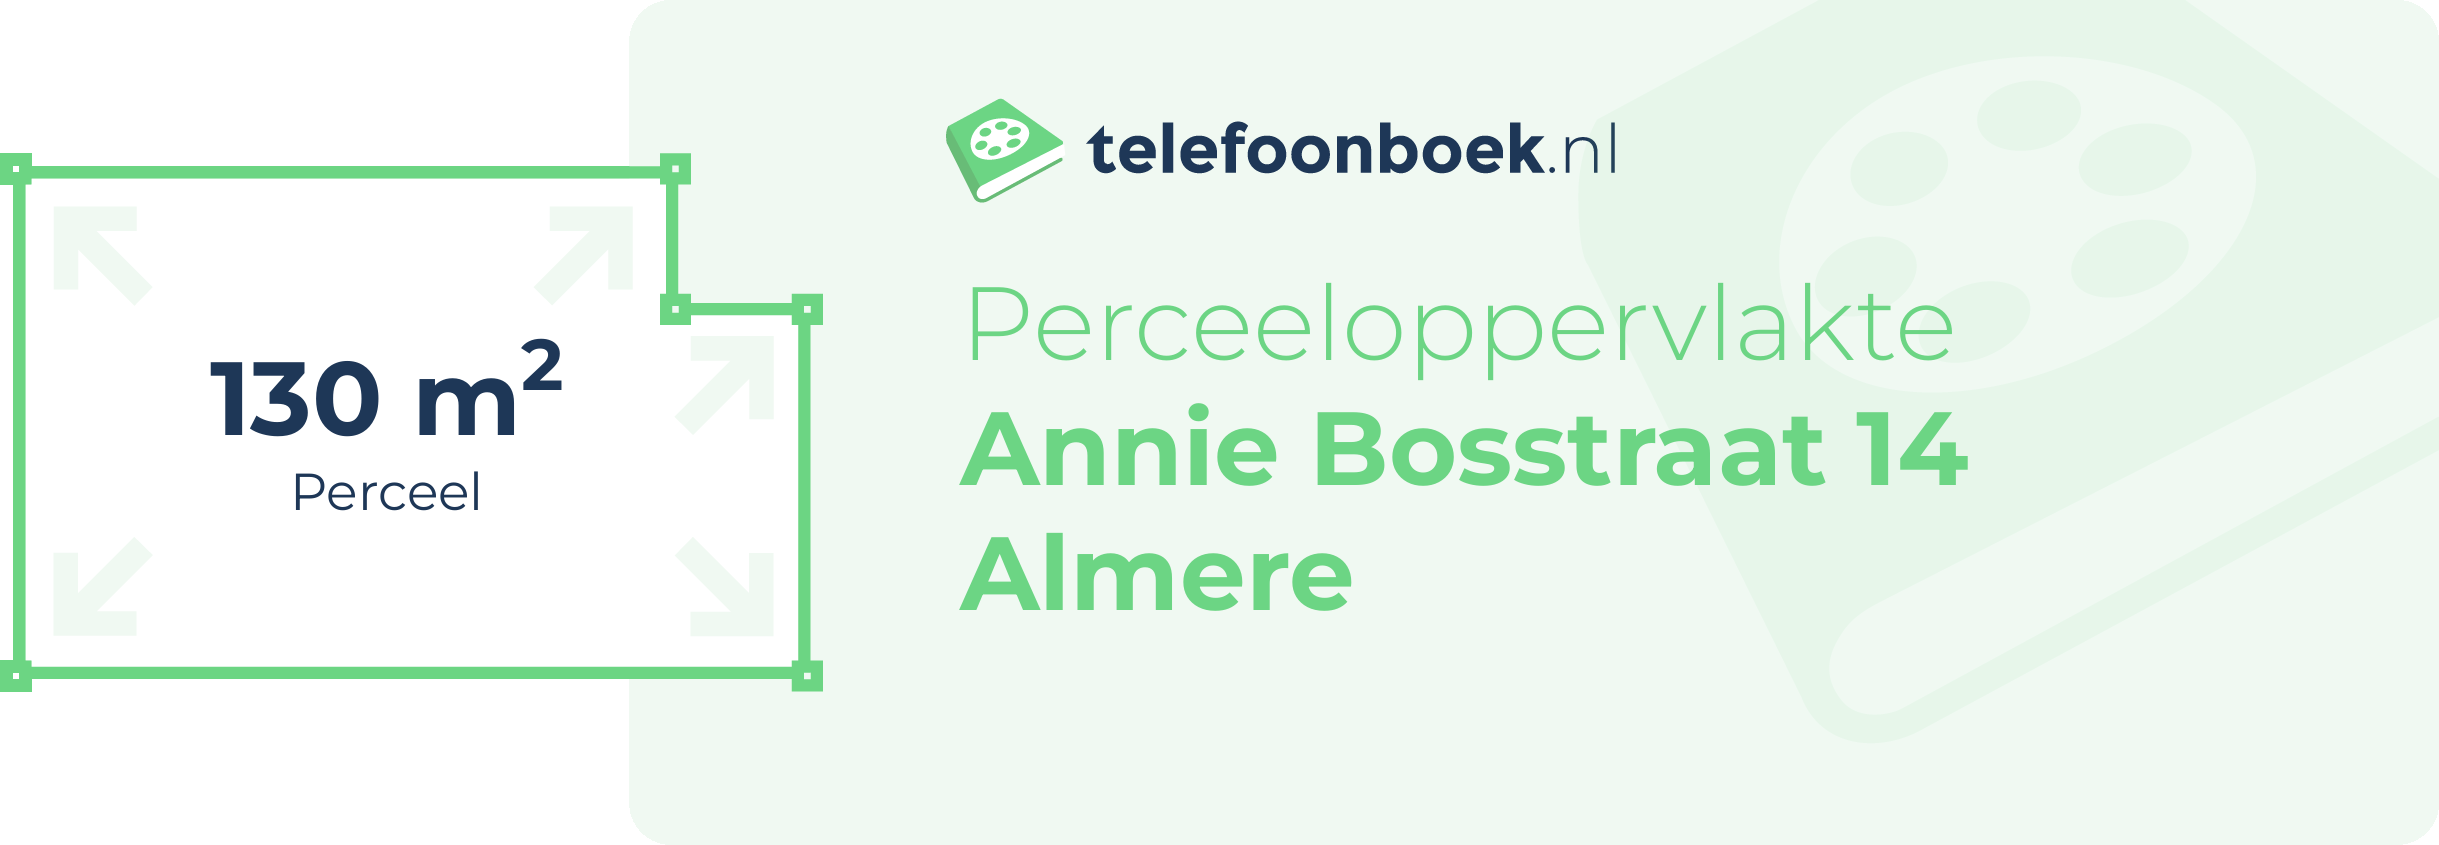 Perceeloppervlakte Annie Bosstraat 14 Almere